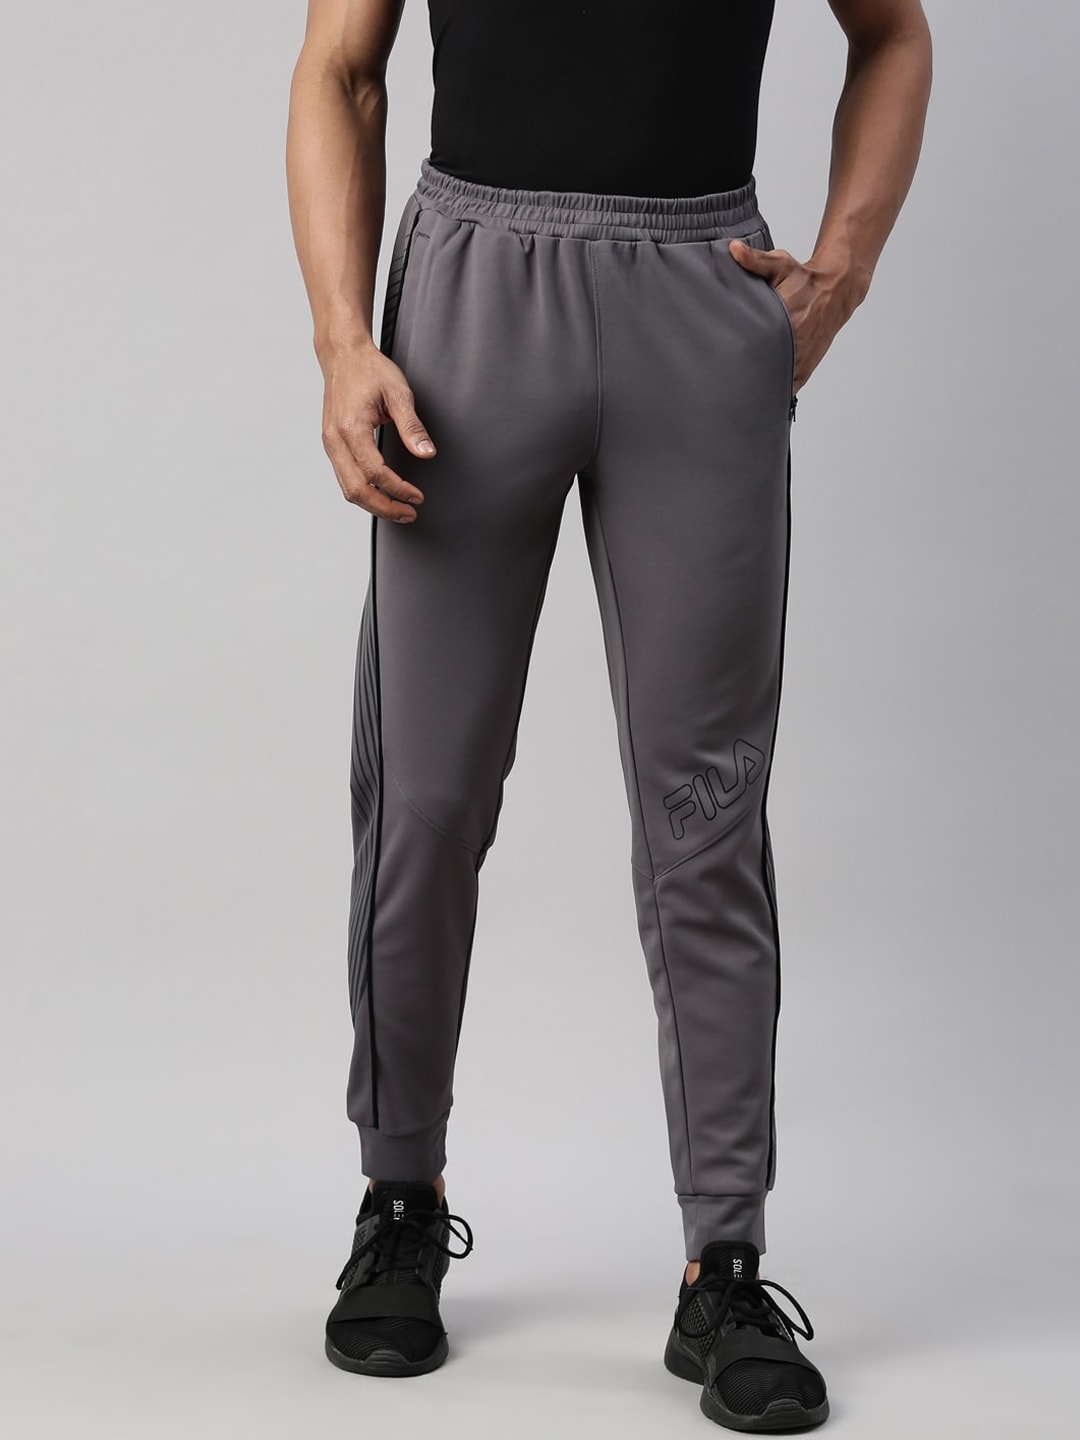 Men's Grey Cotton  Activewear Leggings